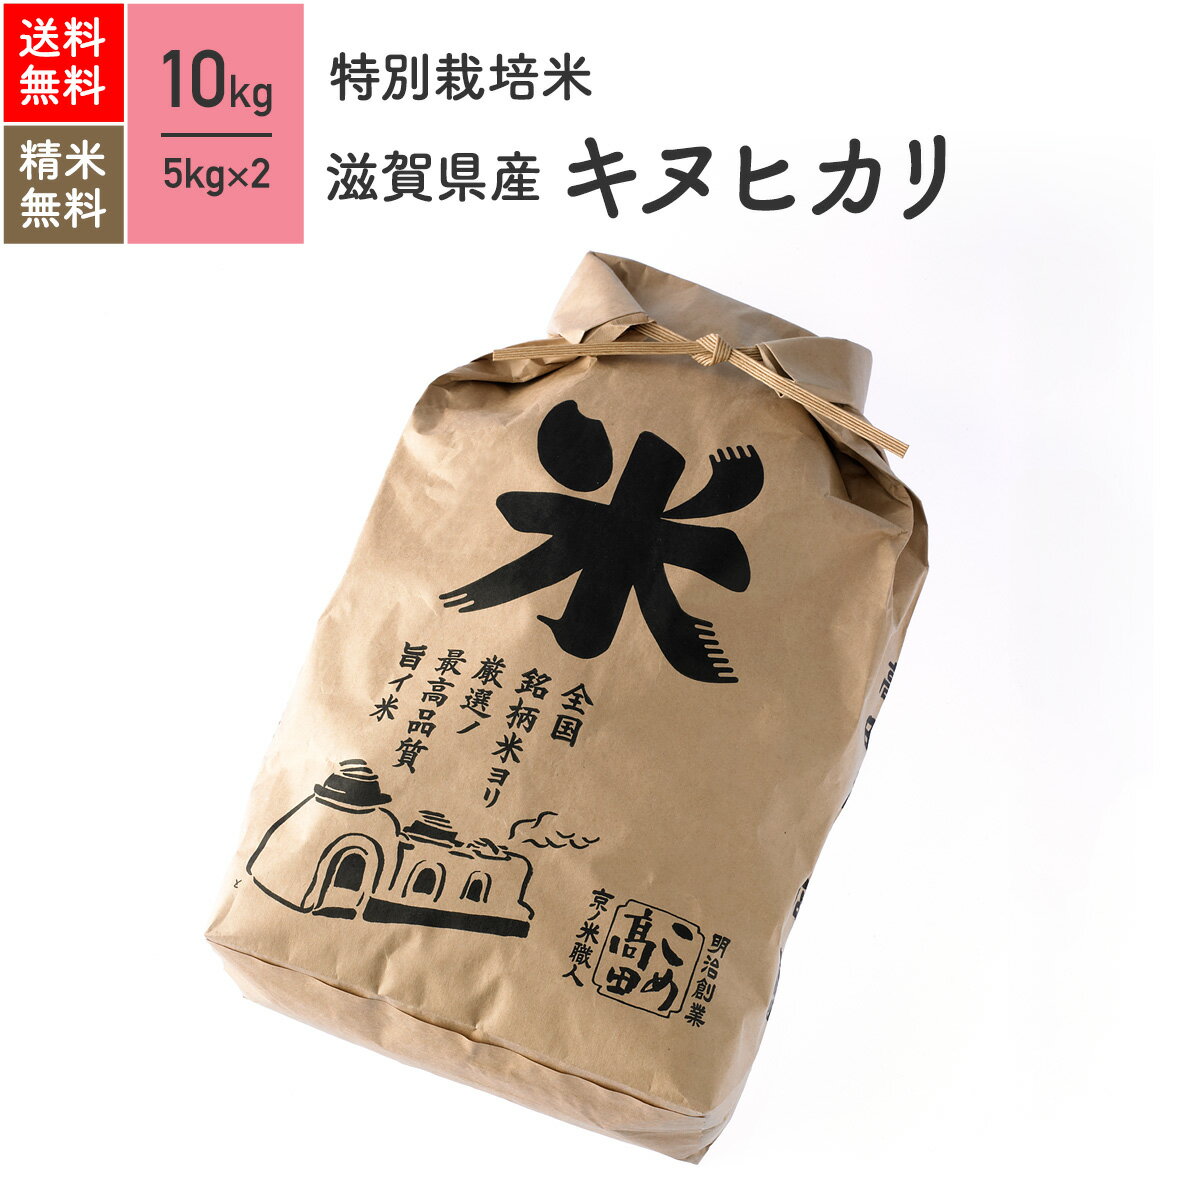 10kg キヌヒカリ 滋賀県産 特別栽培米 令和5年産 送料